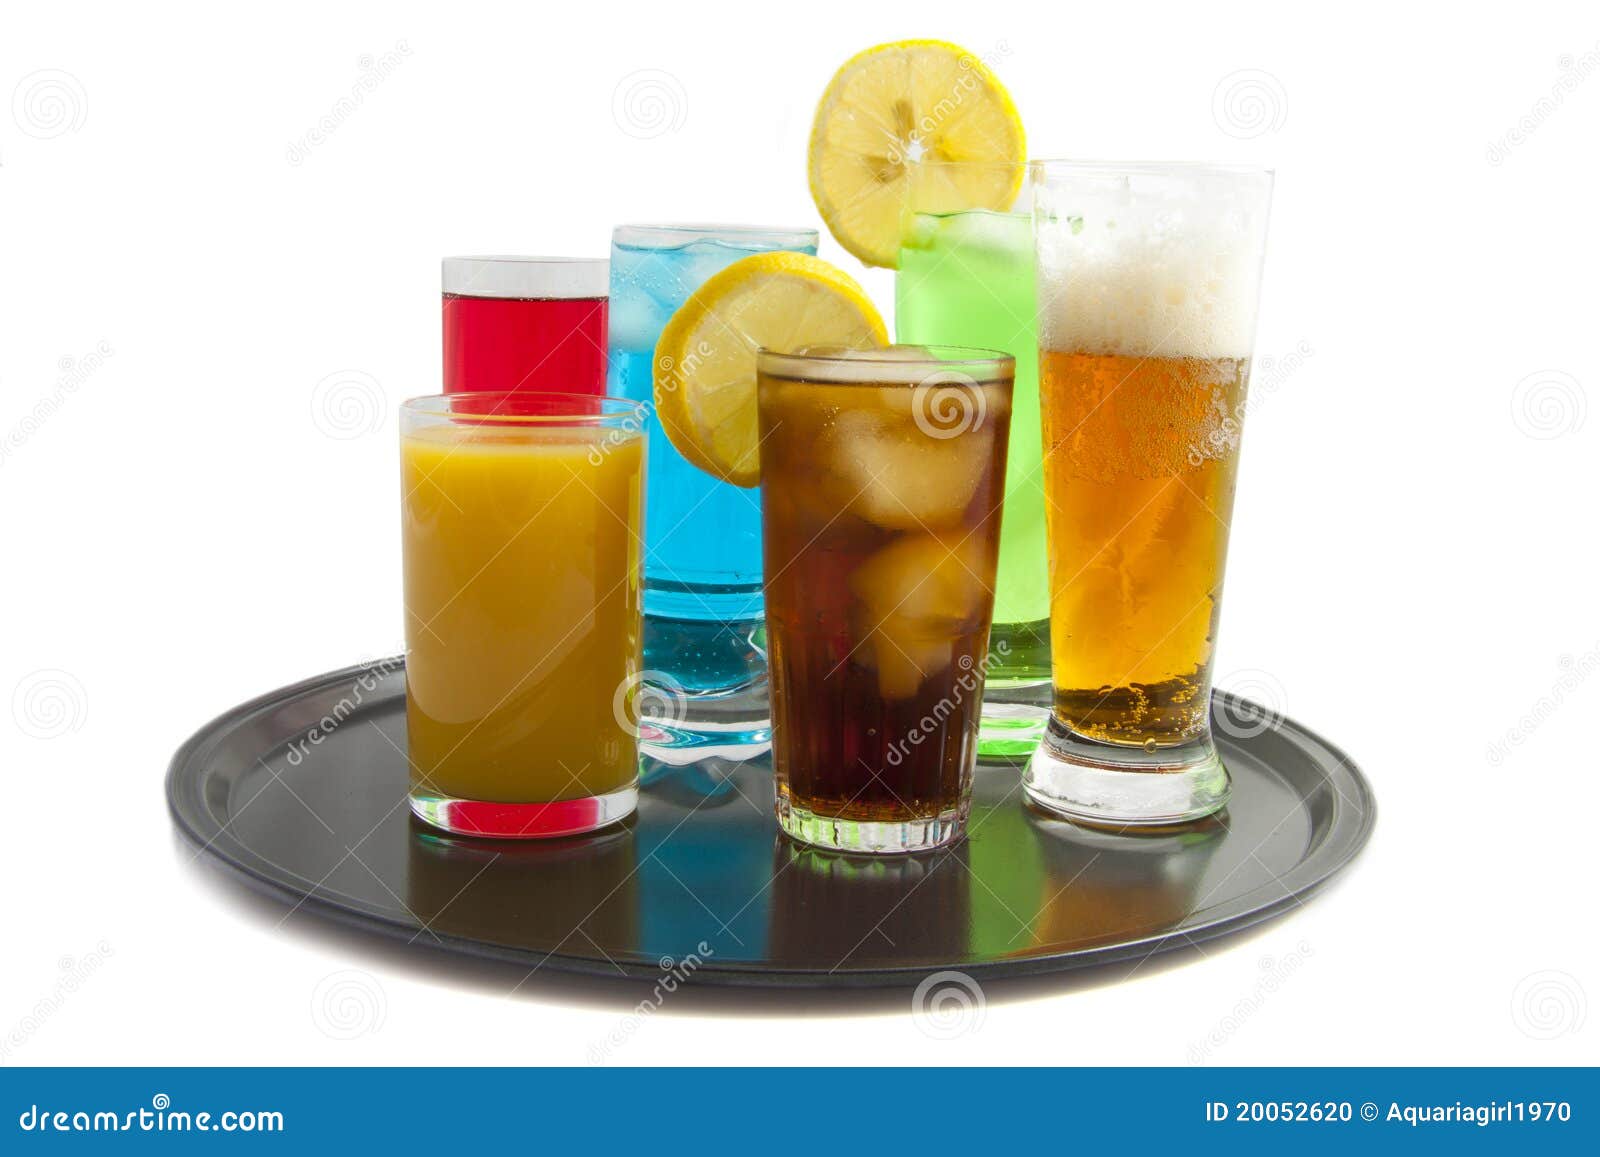 tray-drinks-20052620.jpg